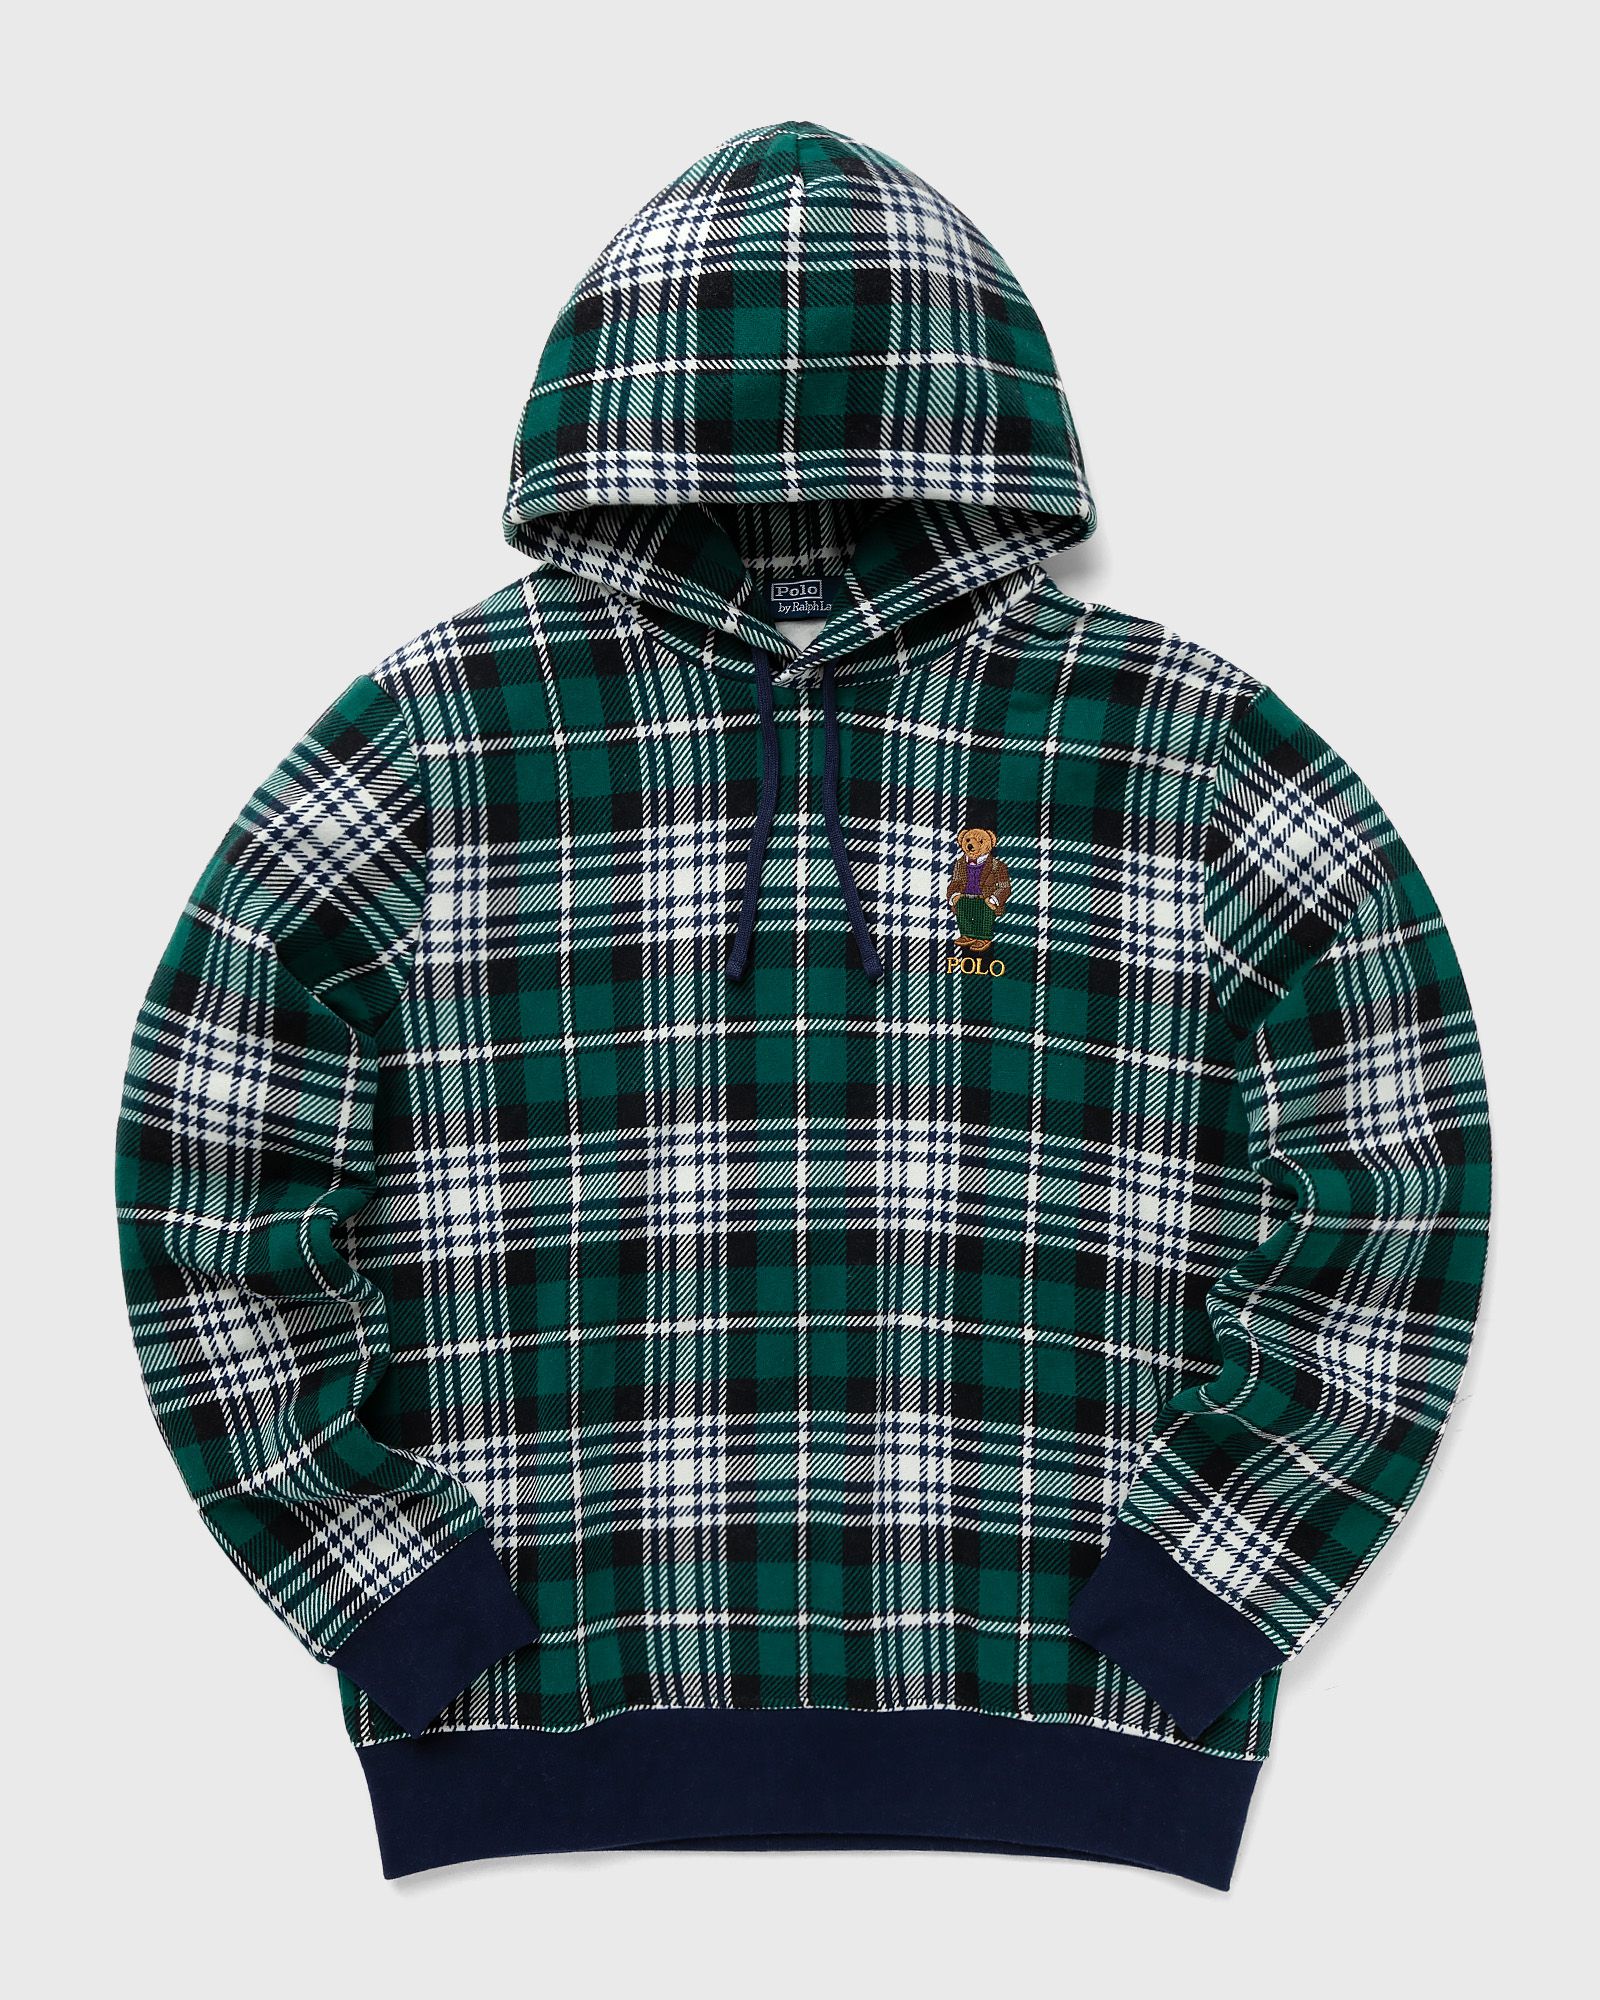 Polo Ralph Lauren - lspohoodm6-l/s hoody men hoodies blue|green in größe:xl